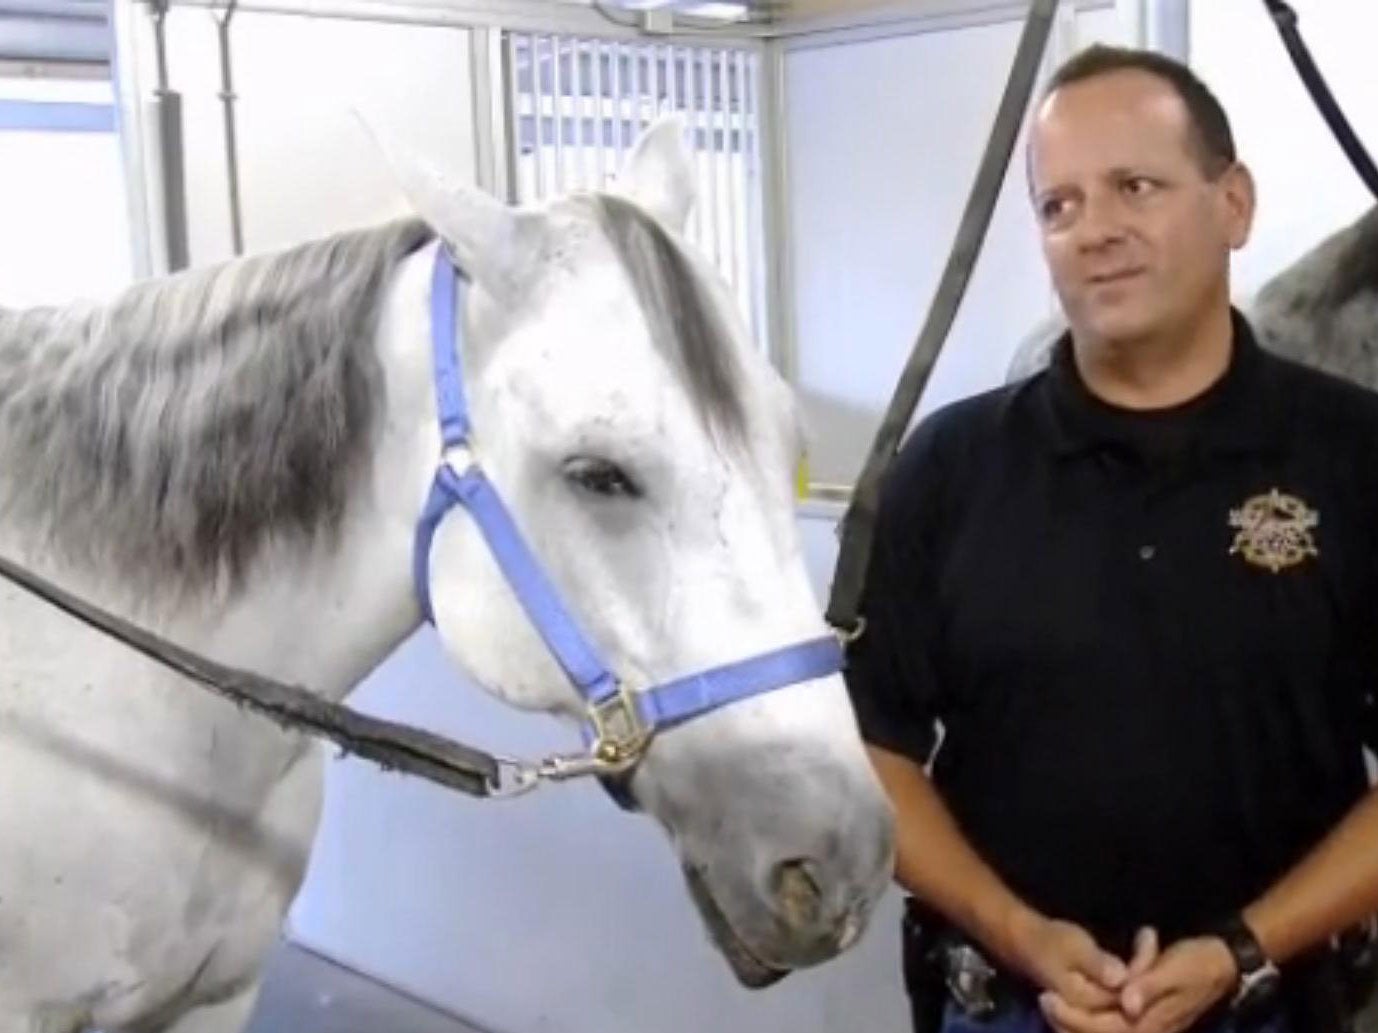 Edward Chrisman with Greyhawk the horse. Picture: KTVK-TV